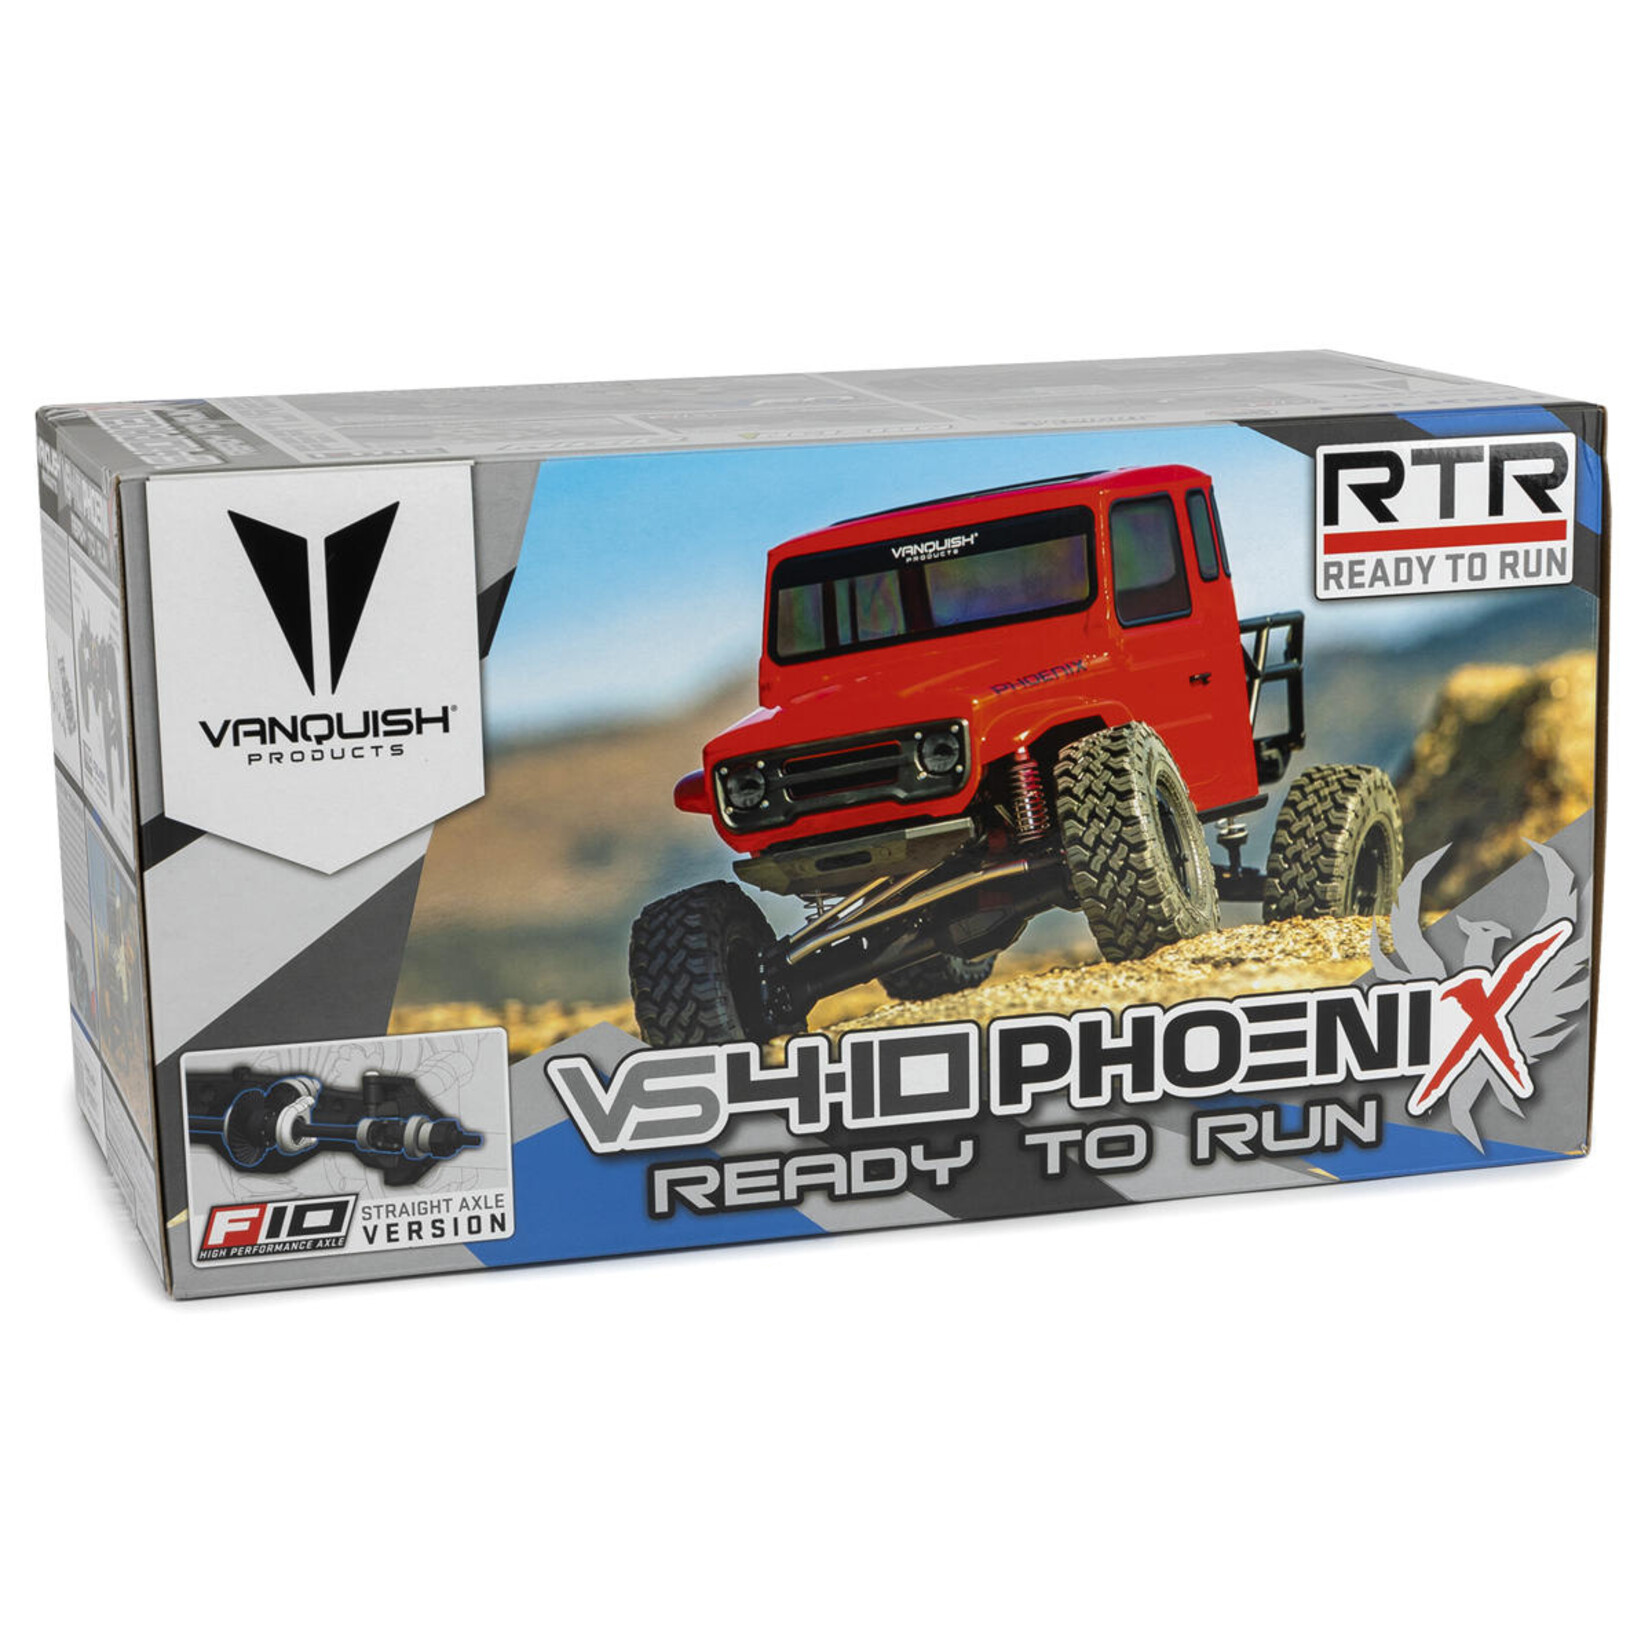 Vanquish Products Vanquish Products VS4-10 Phoenix Straight Axle RTR Rock Crawler (Grey) #VPS09011